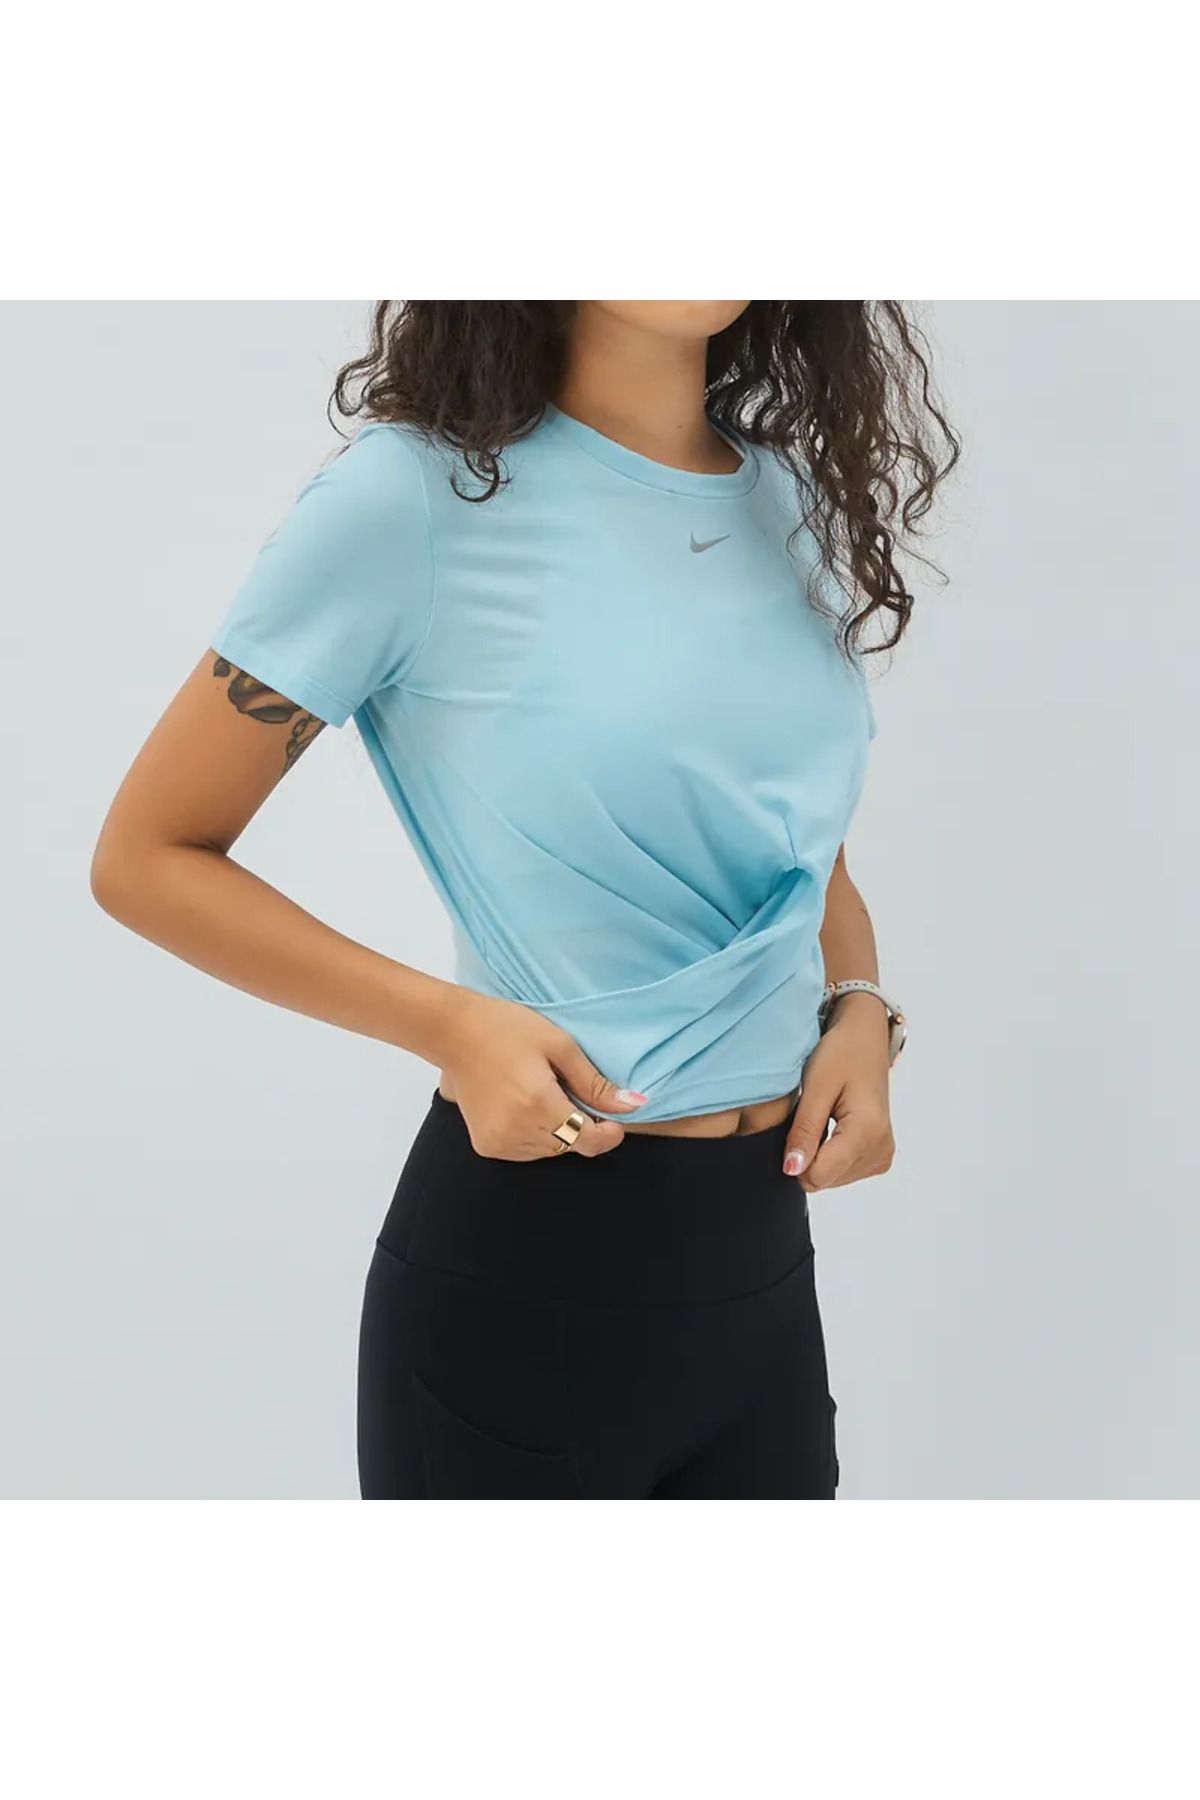 Nike One Luxe Dri-Fit Kadın Mavi Antrenman T-shirt